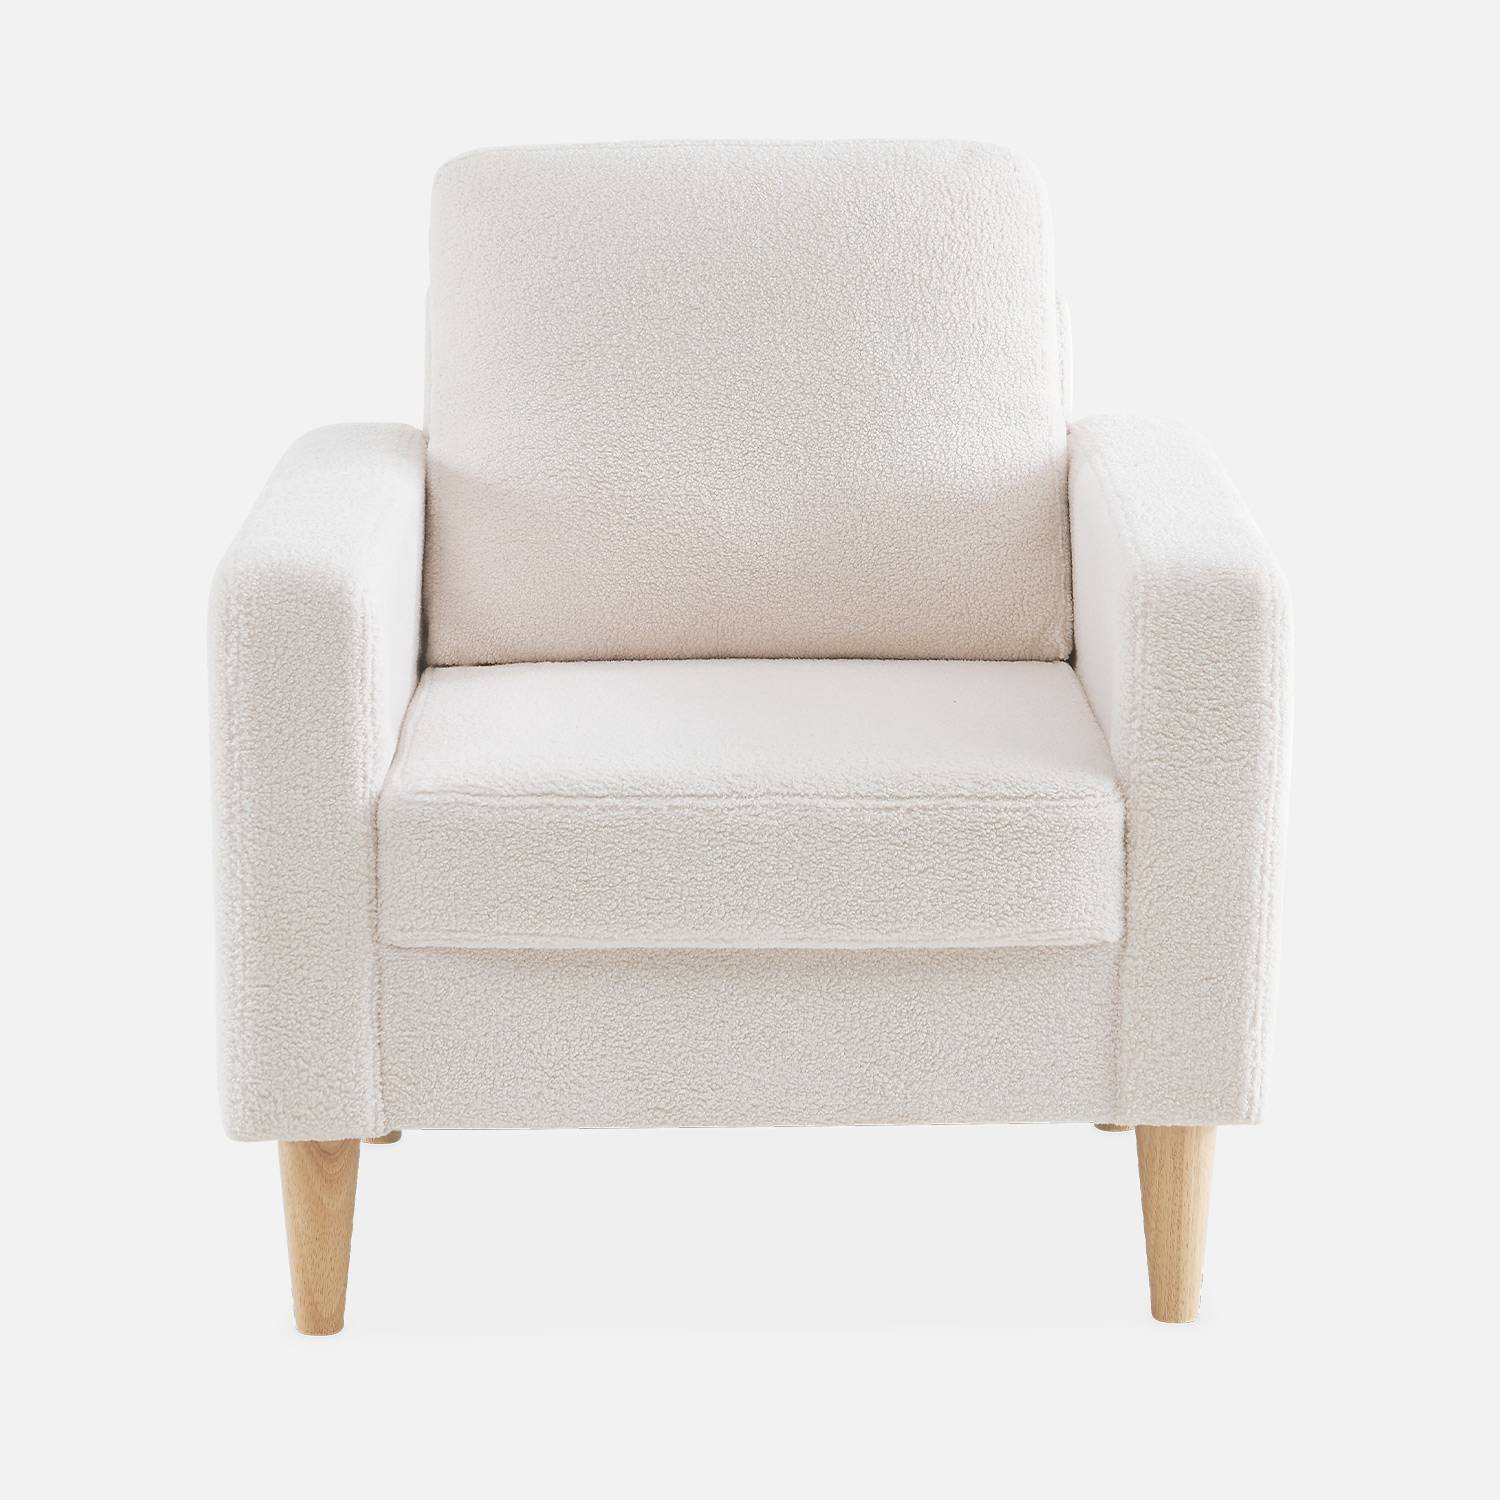 Bouclé Sessel Weiß, skandinavisches Design - Bjorn - 1 Sitzer, Fauteuil gerade mit Holzbeinen Photo5